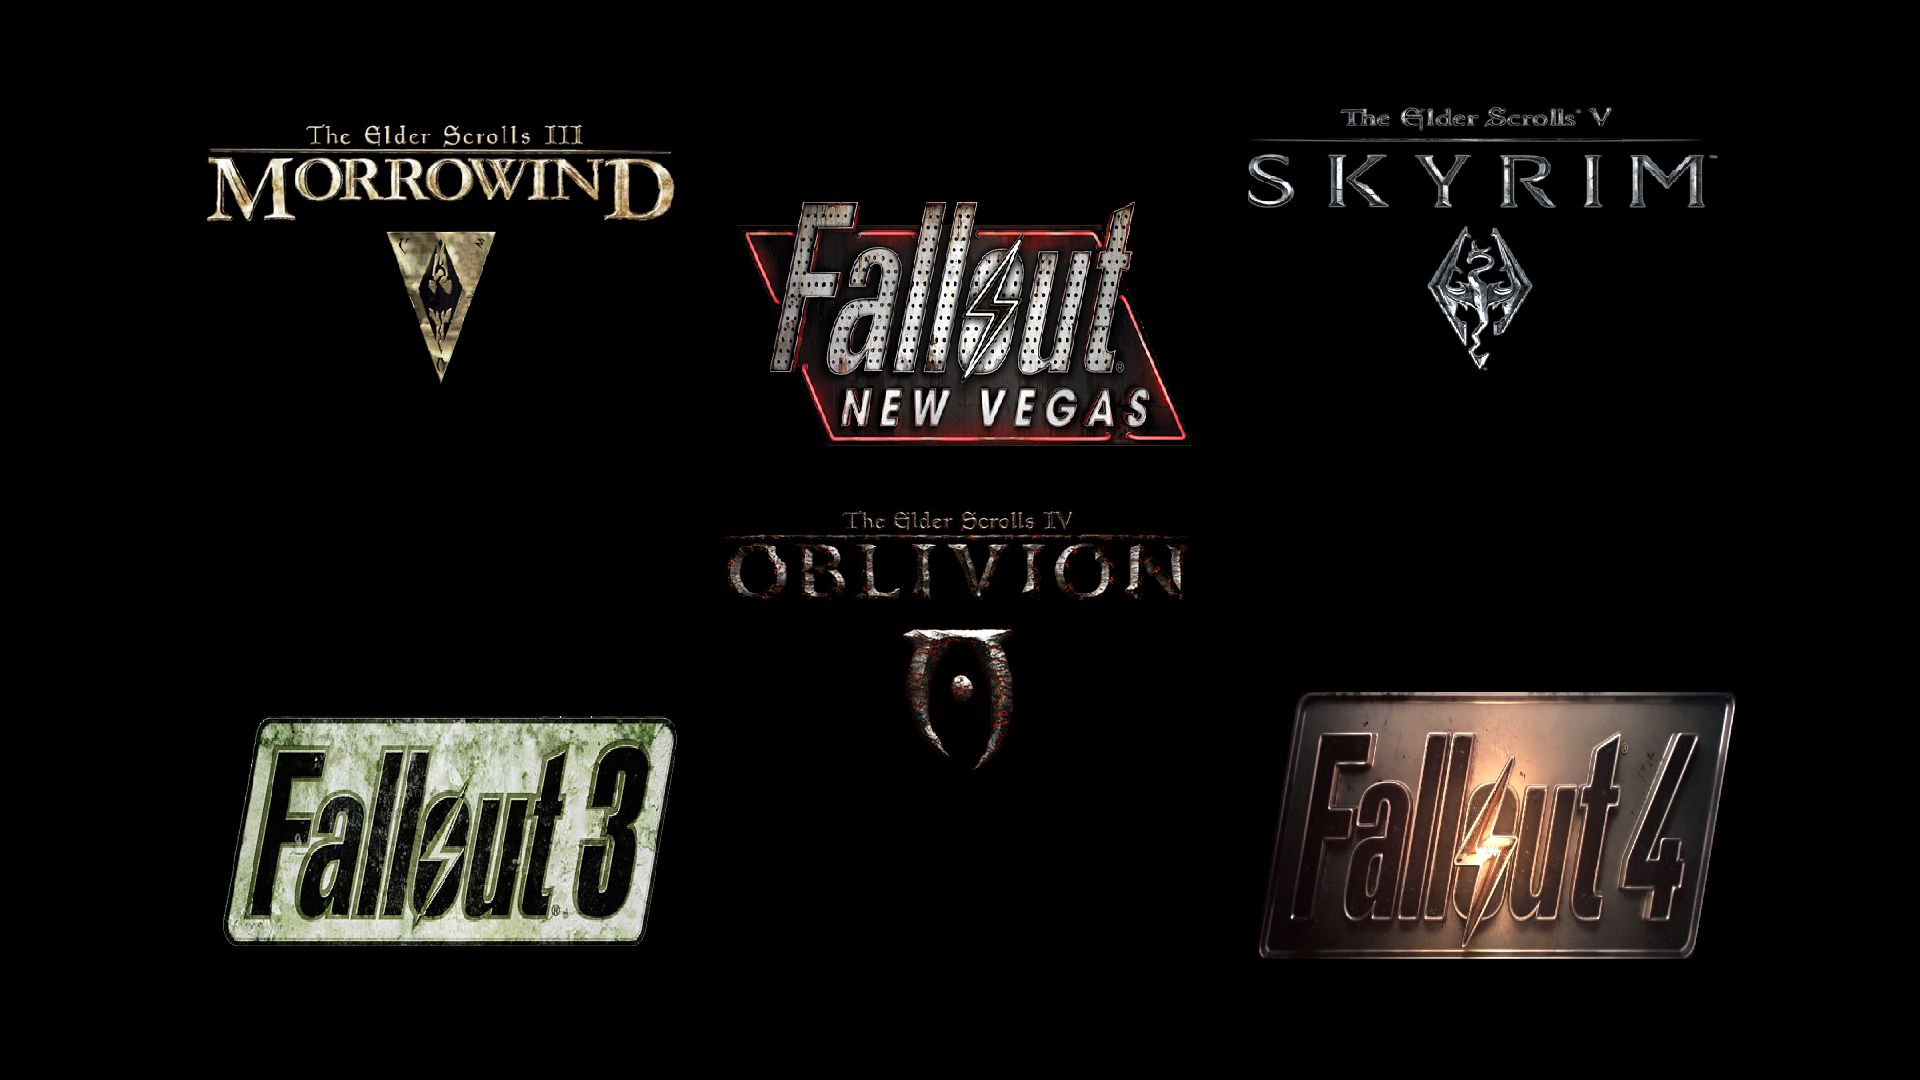 fallout 4, video game, bethesda, fallout 3, fallout: new vegas, skyrim, the elder scrolls iii: morrowind, the elder scrolls iv: oblivion, the elder scrolls